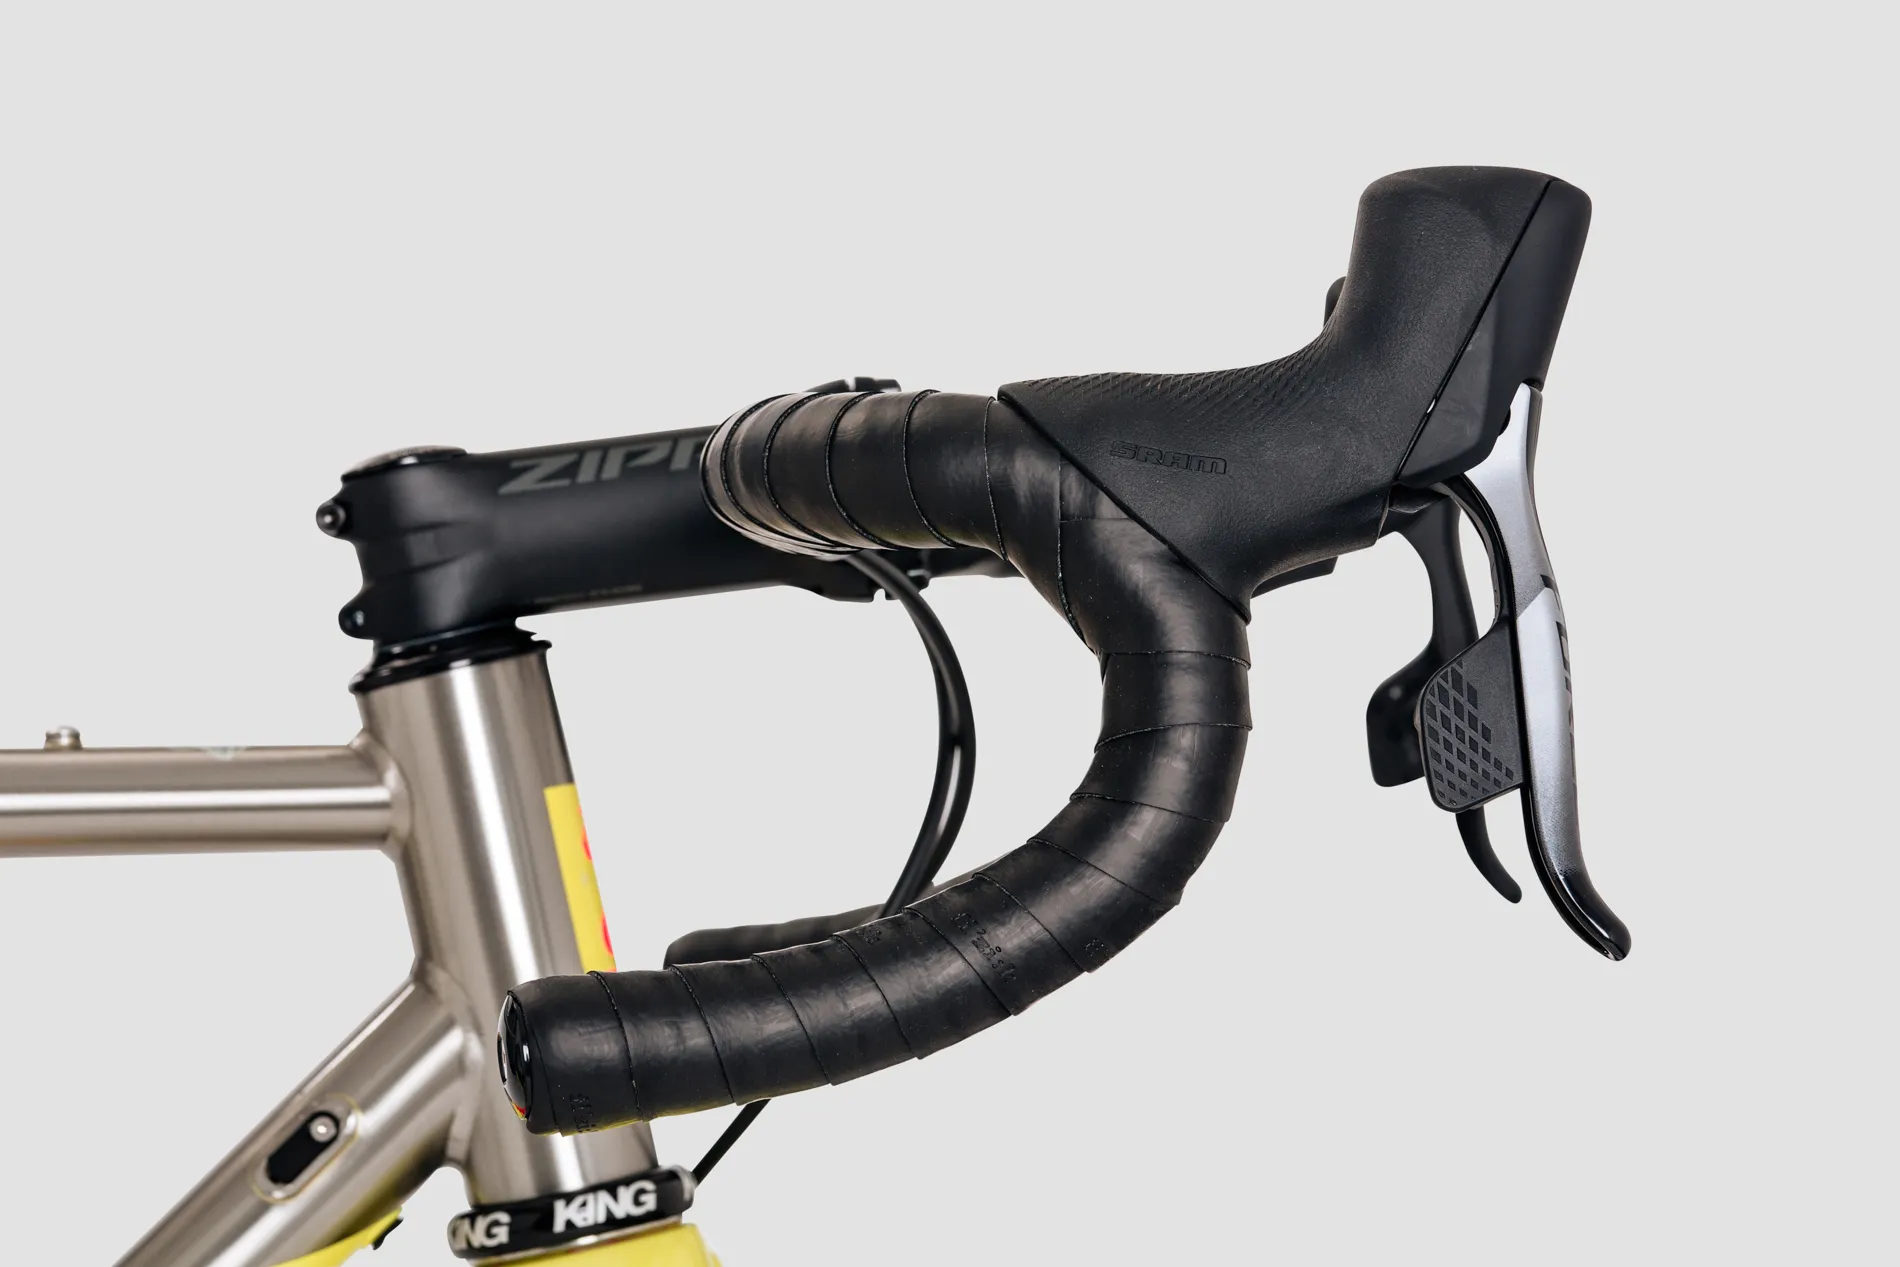 Zipp handlebar of Erdgeschoss gravel bike in yellow colour